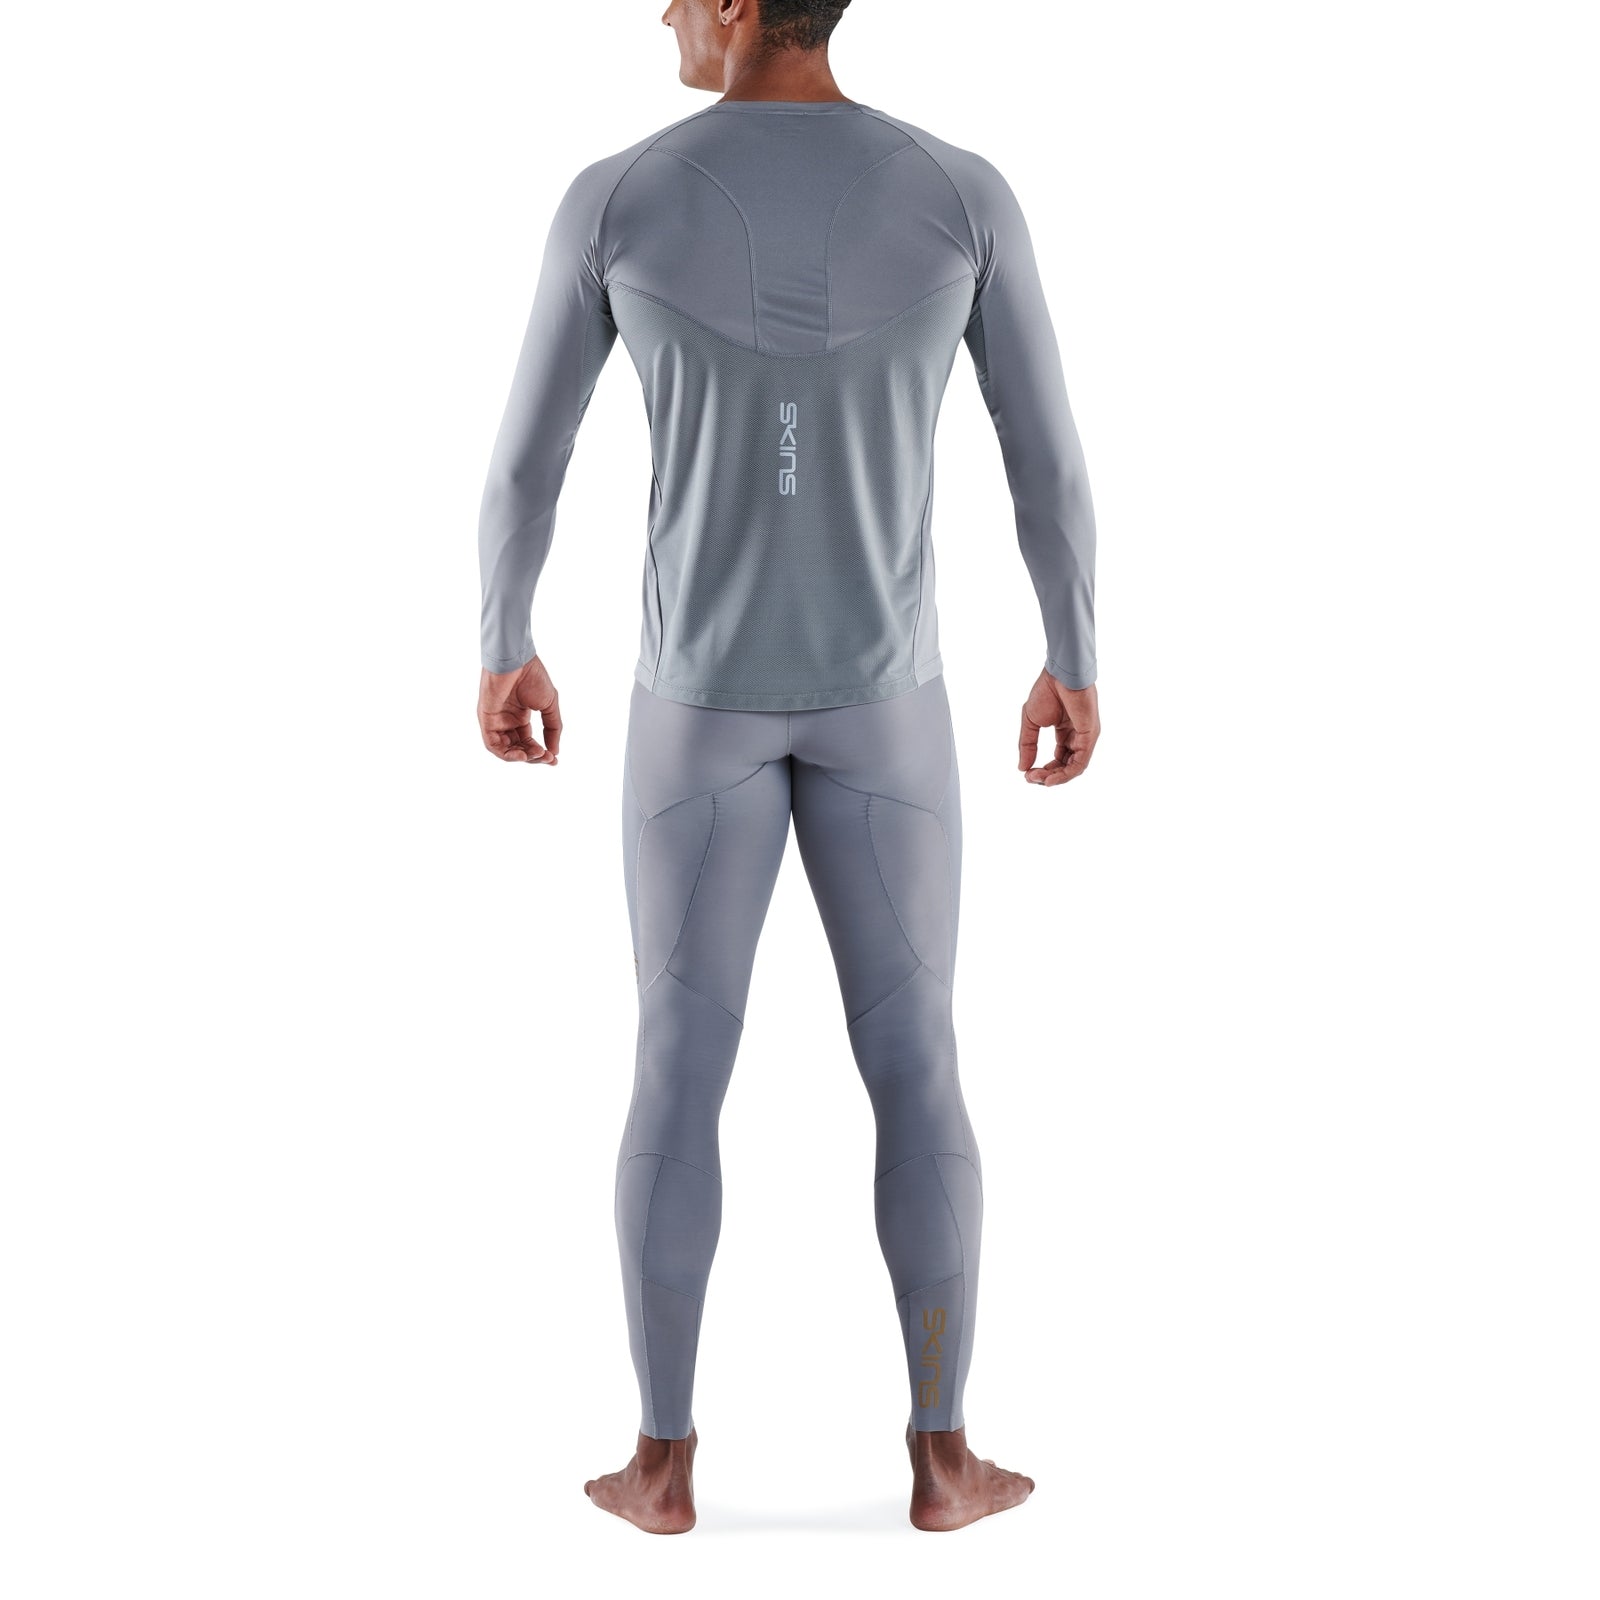 SKINS SERIES-3 Men's Long Sleeve Shirt Mid Grey